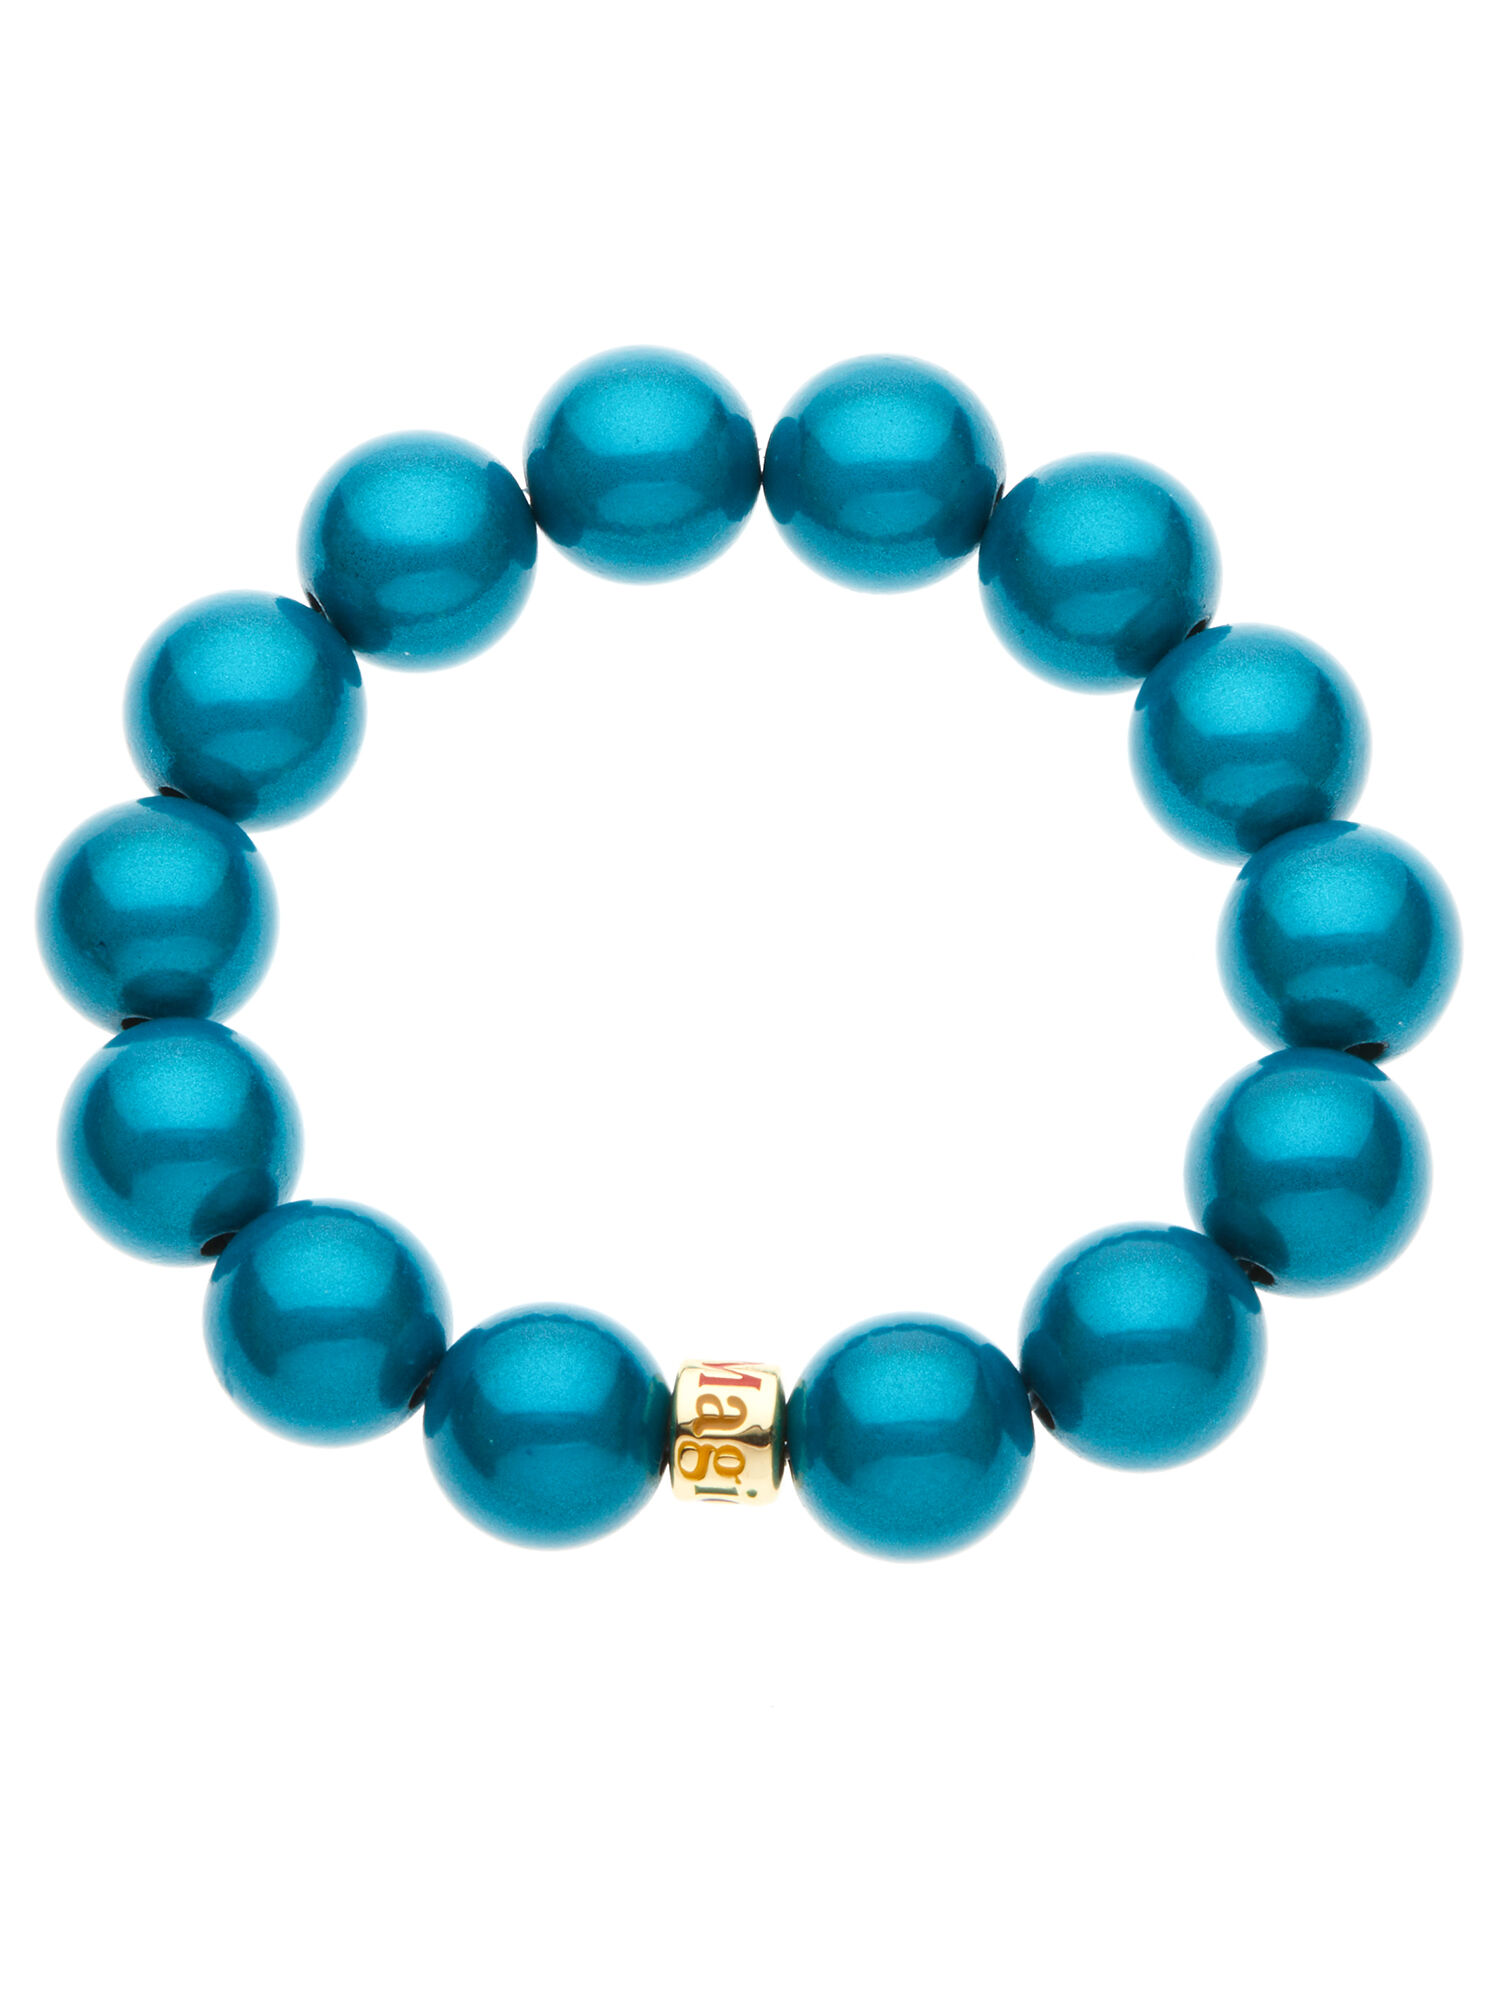 Magic Pearl Armband, mit Marken-Rondell, blau  x blau